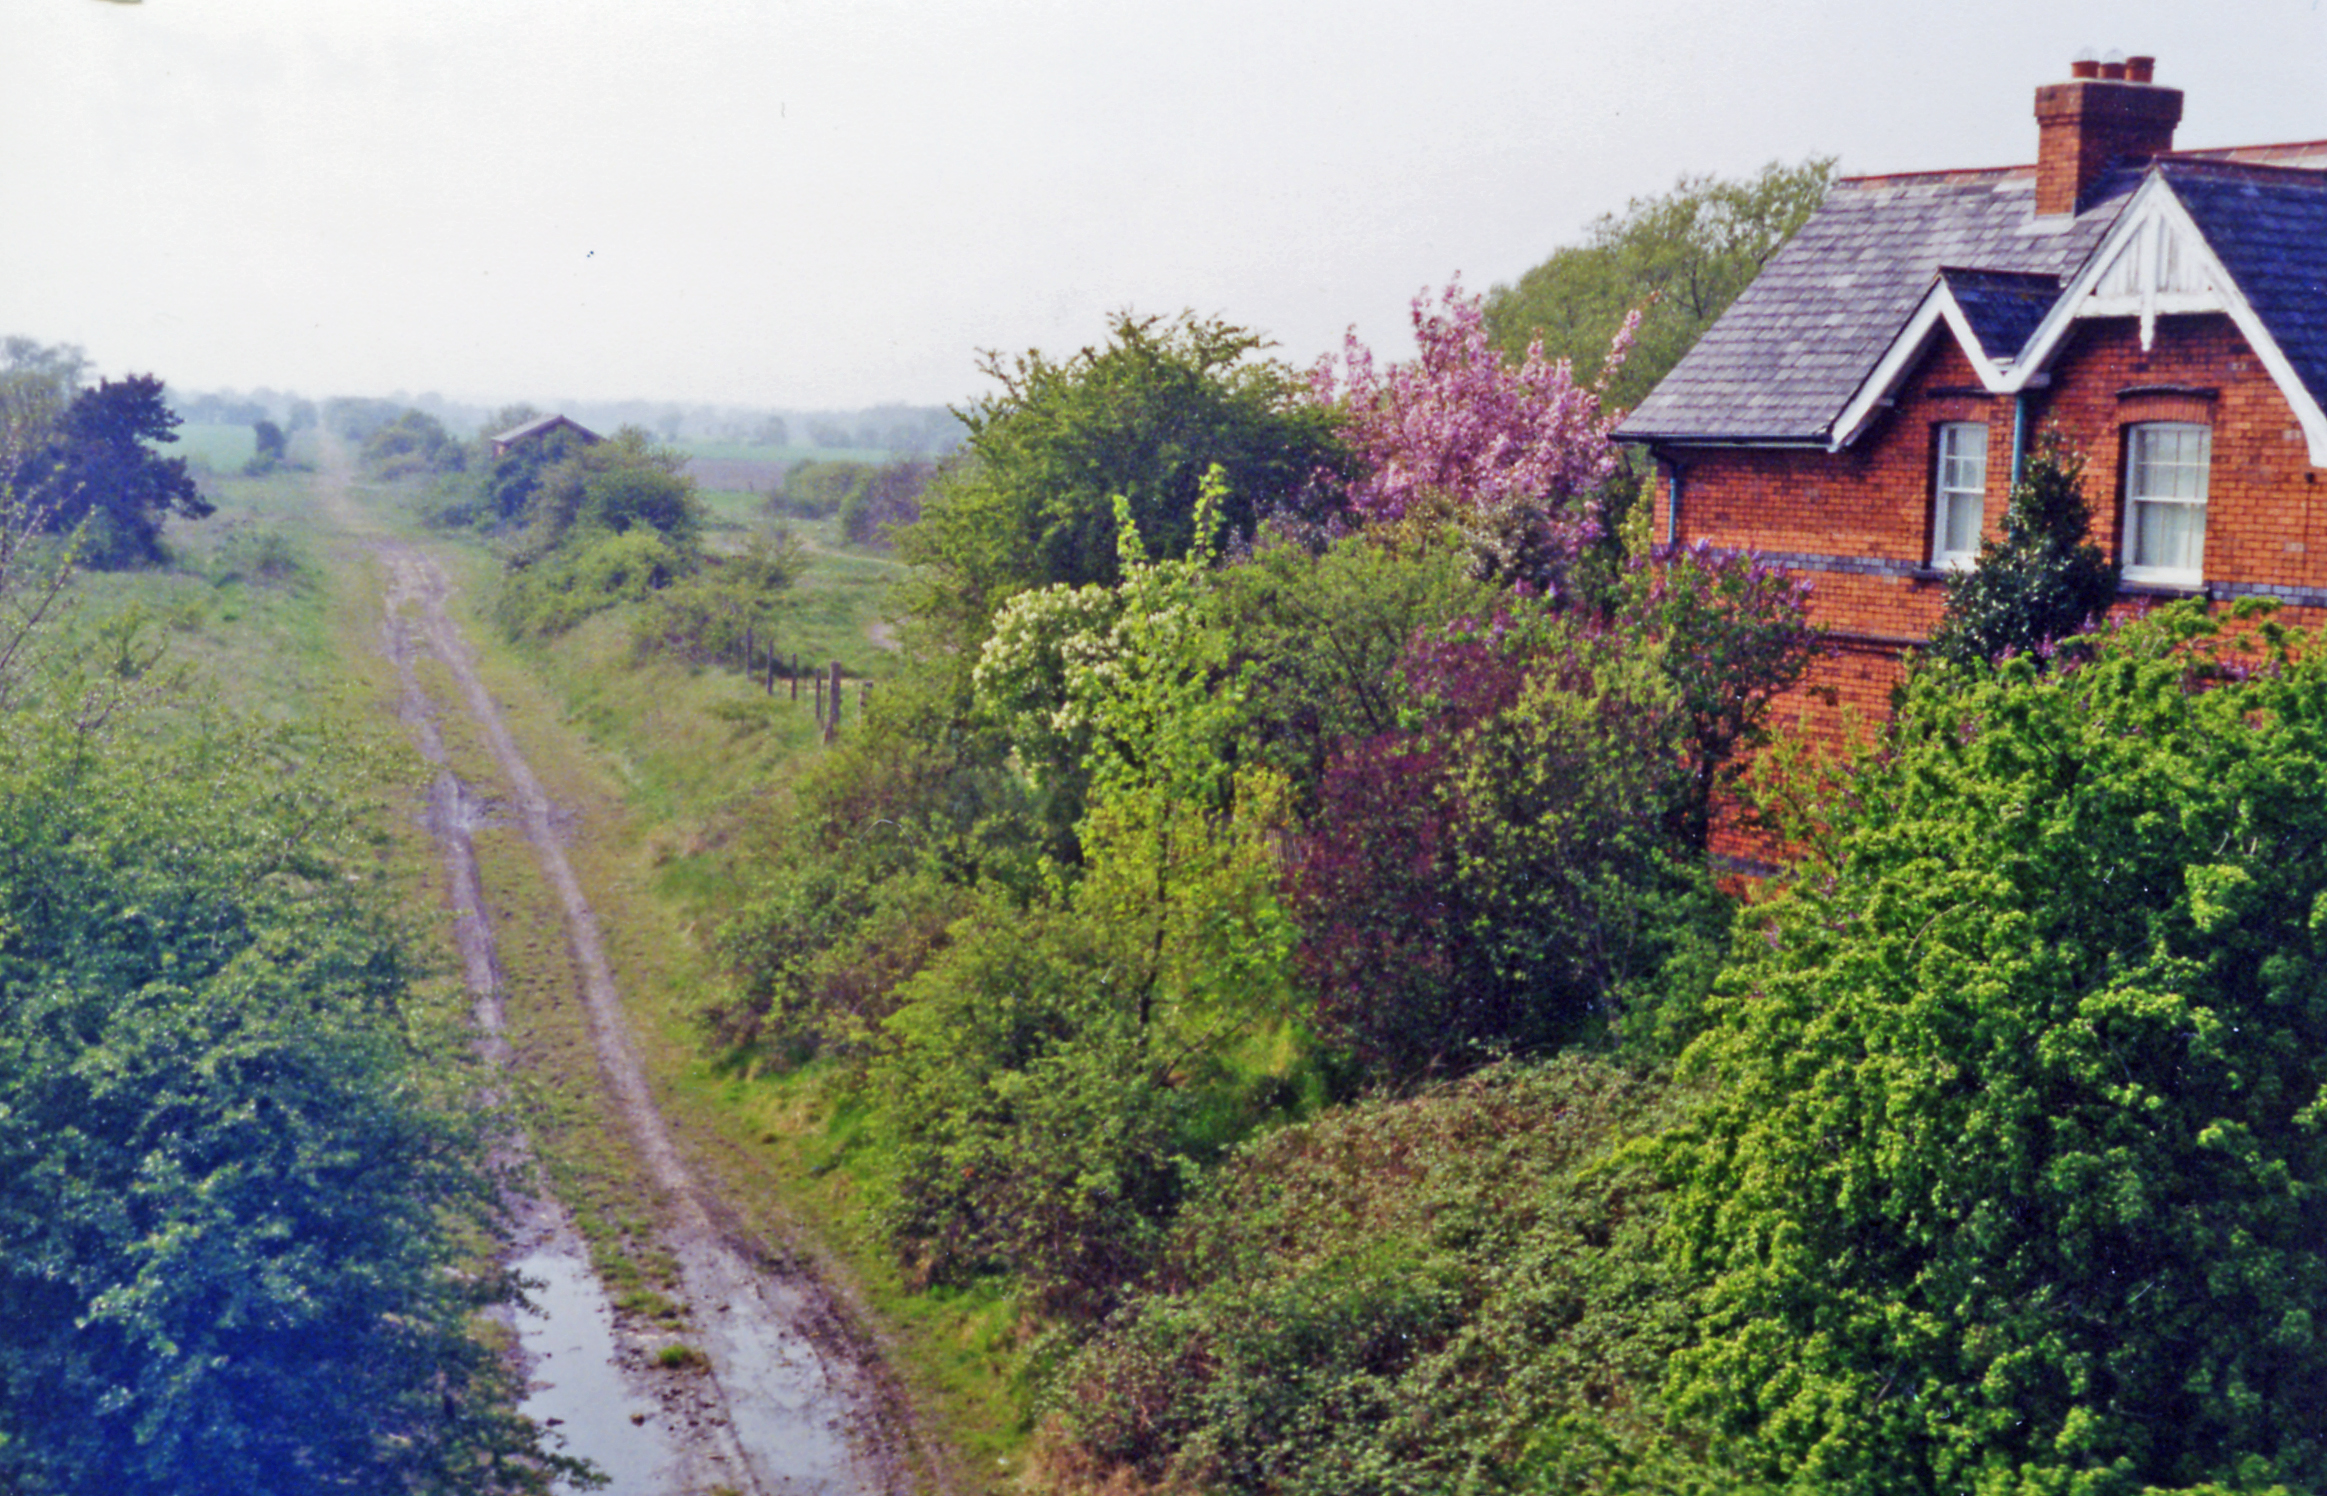 Doddington and Harby railway station